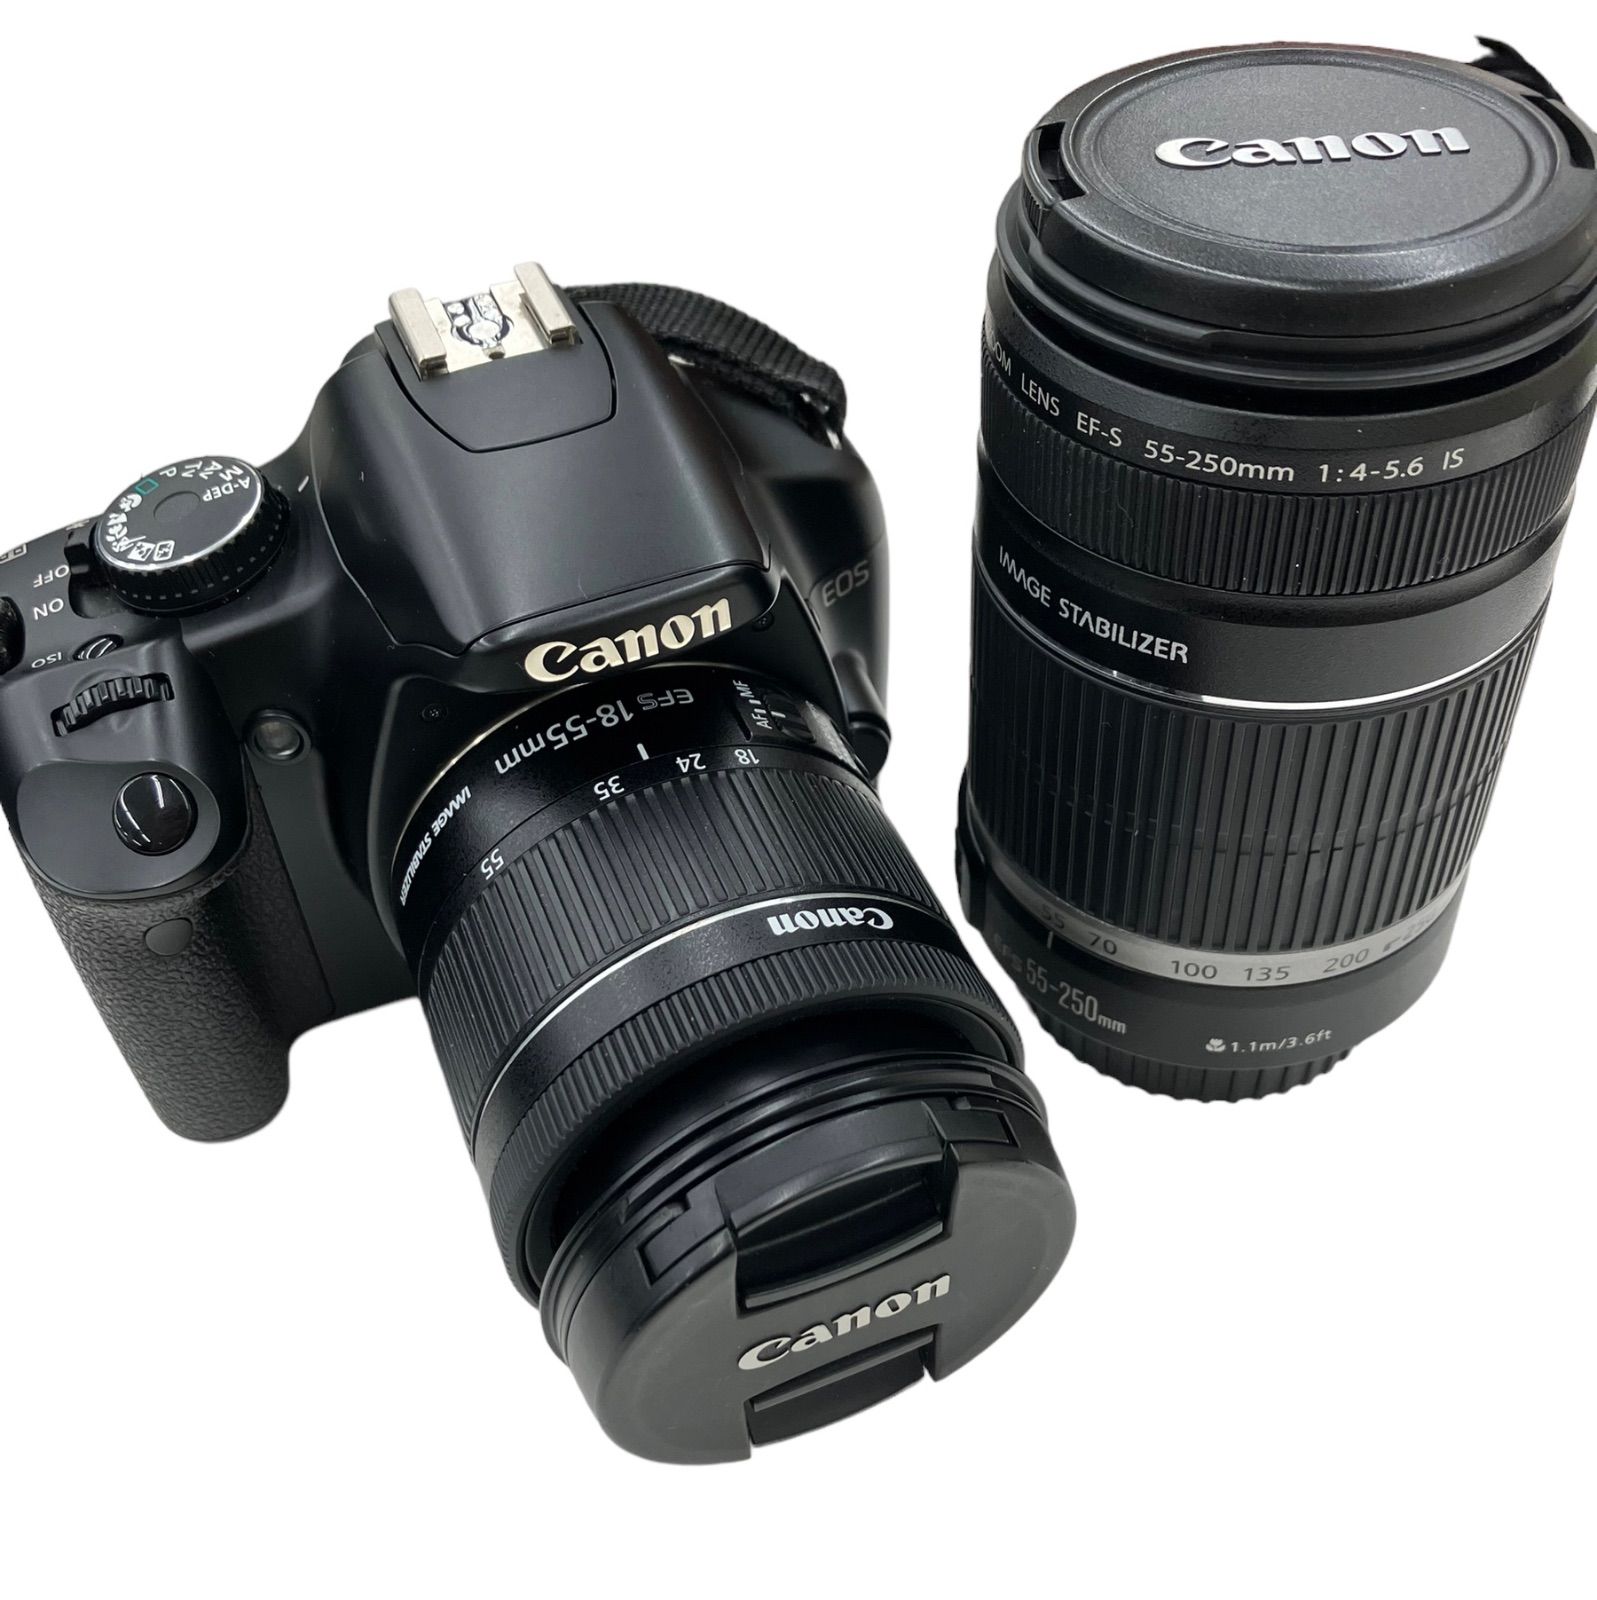 Canon EOS Kiss X2 DS126181 一眼レフカメラ